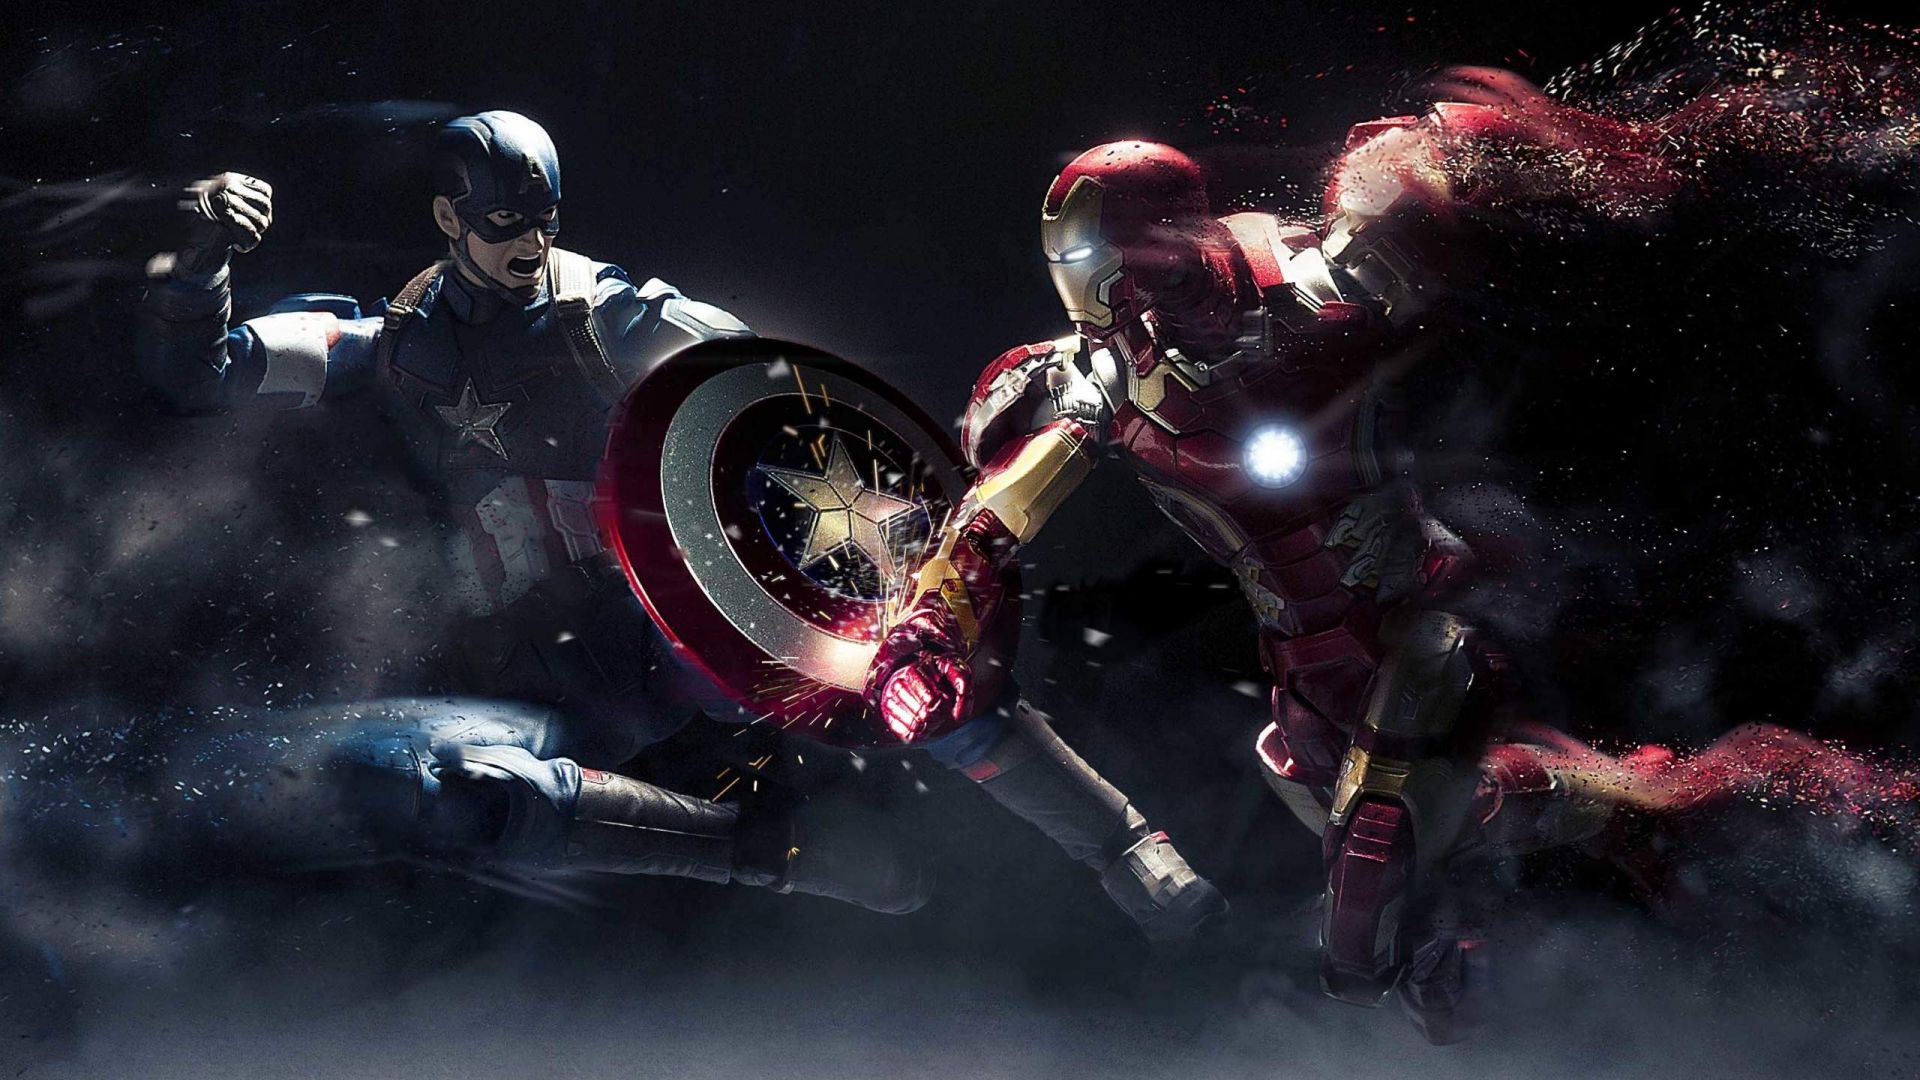 Wallpaper Captain america vs iron man civil war